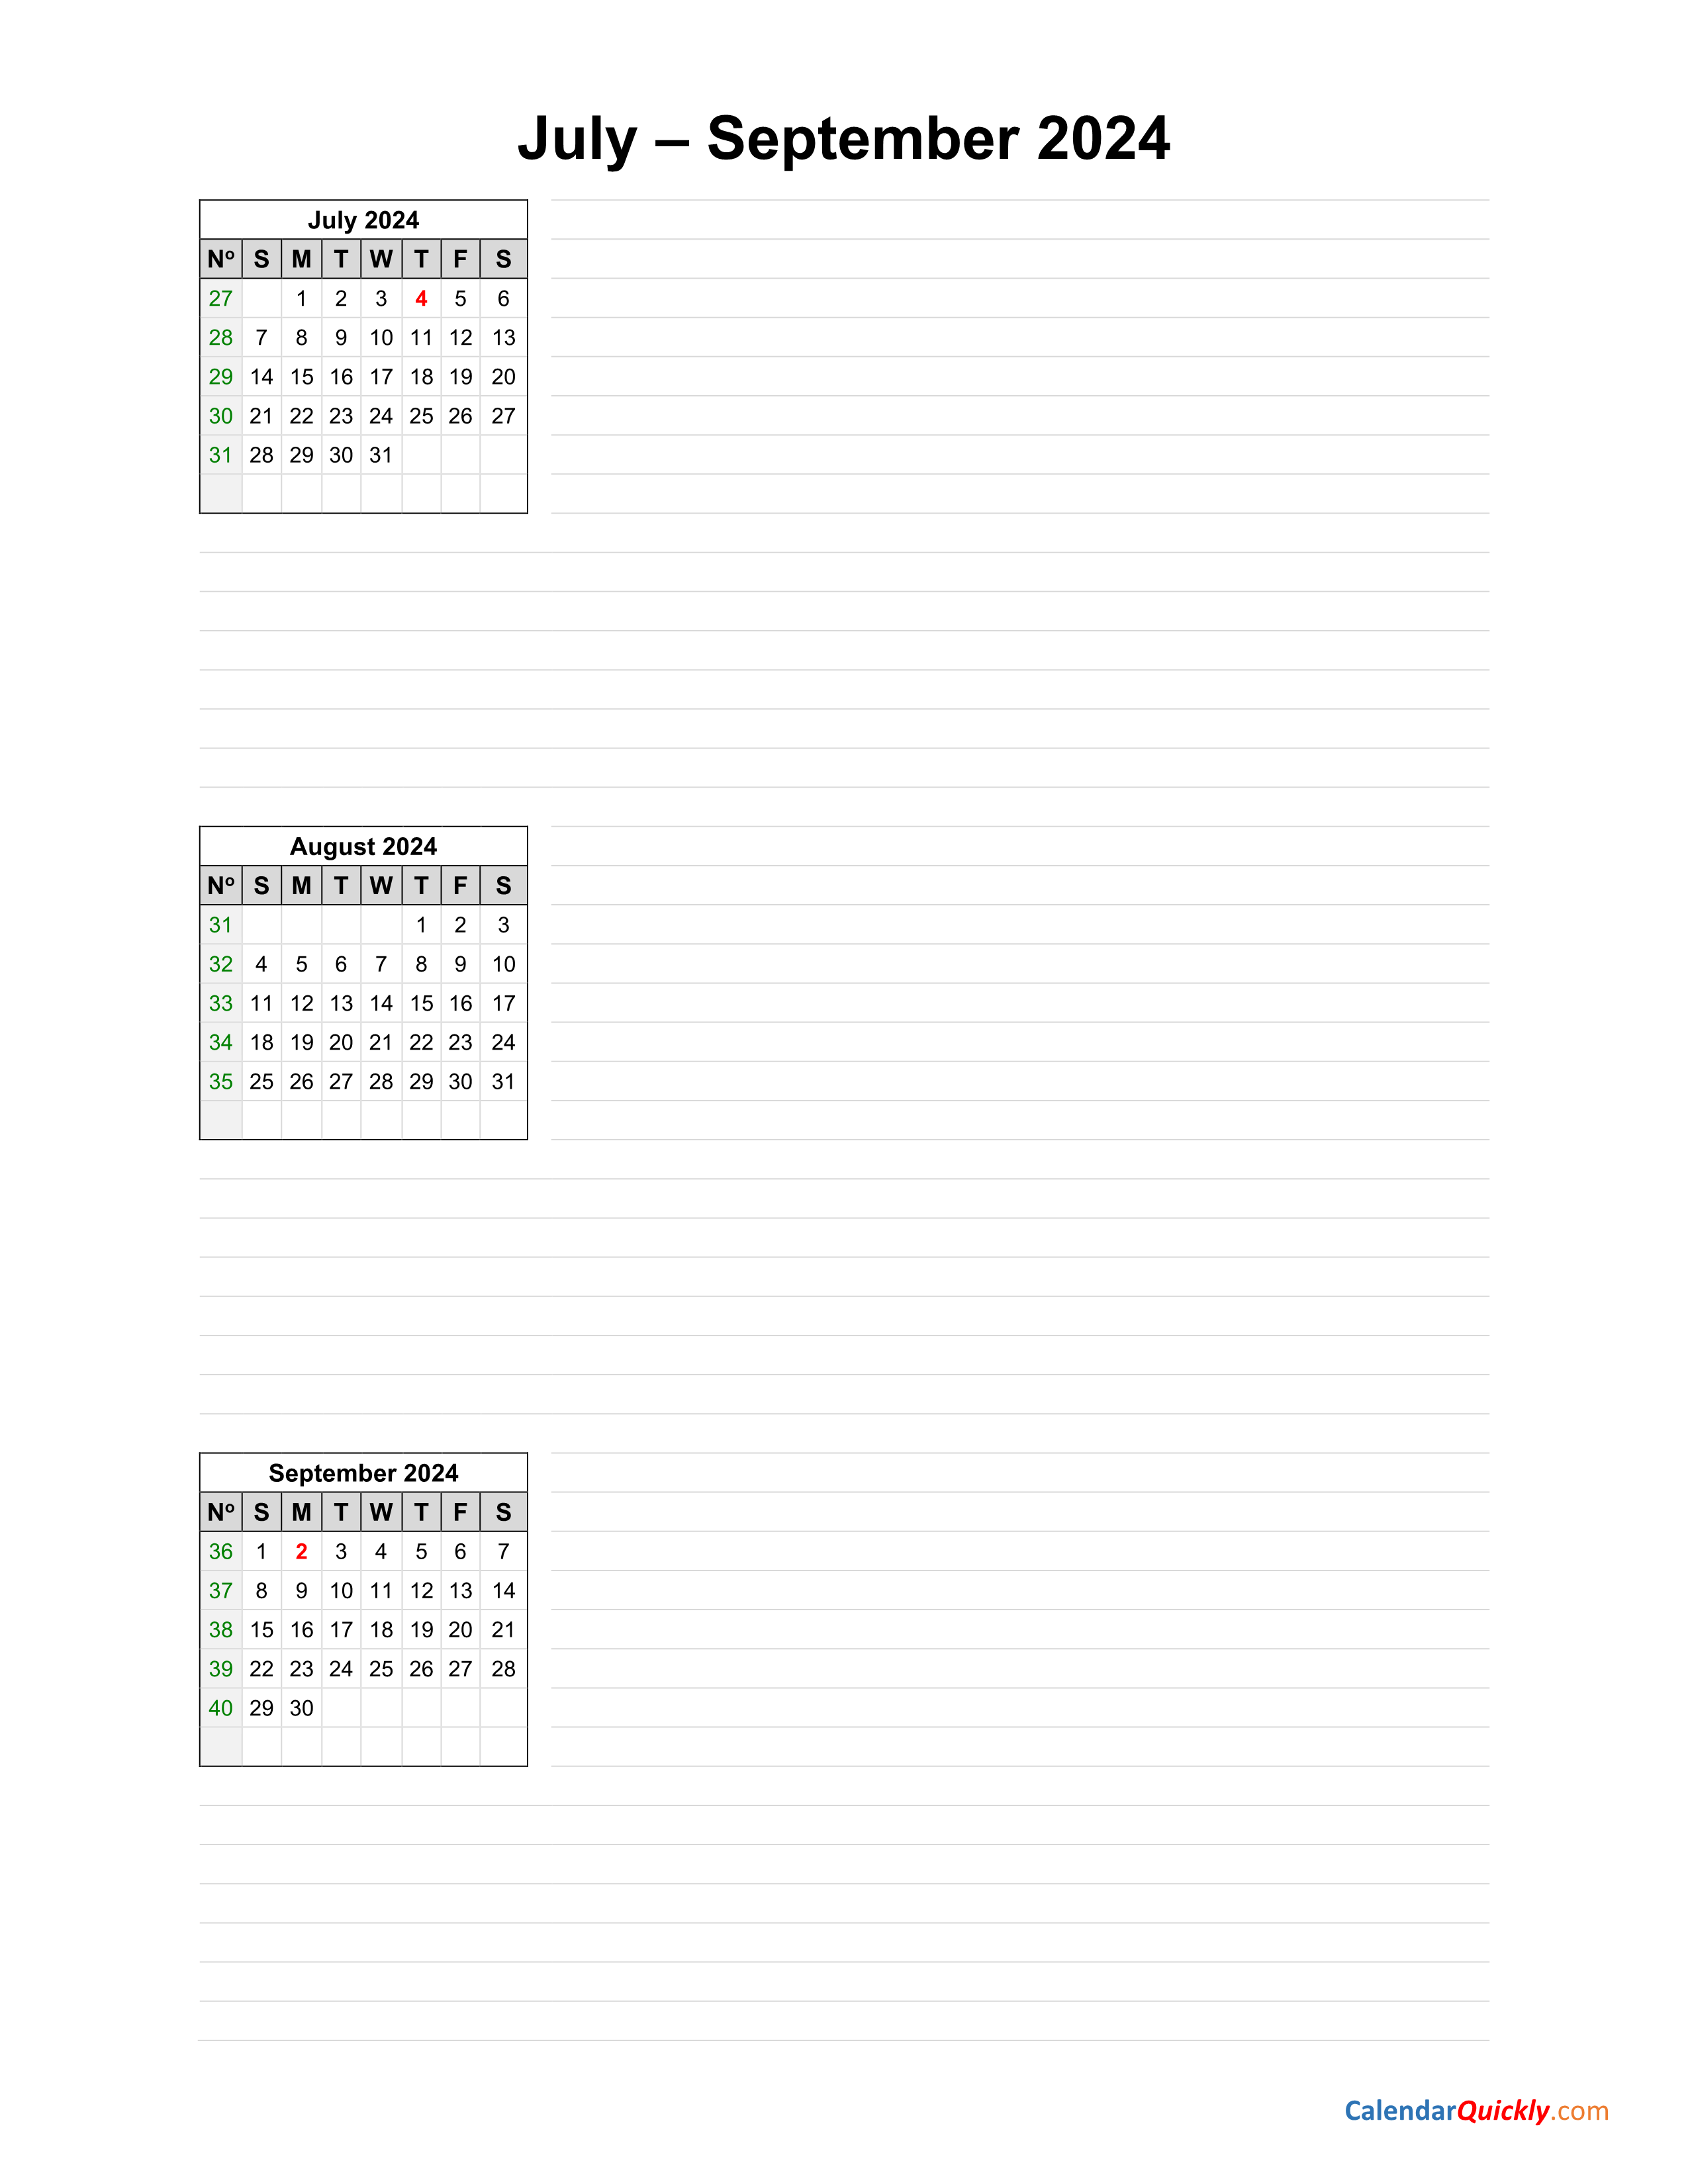 July to September 2024 Calendar Calendar Quickly